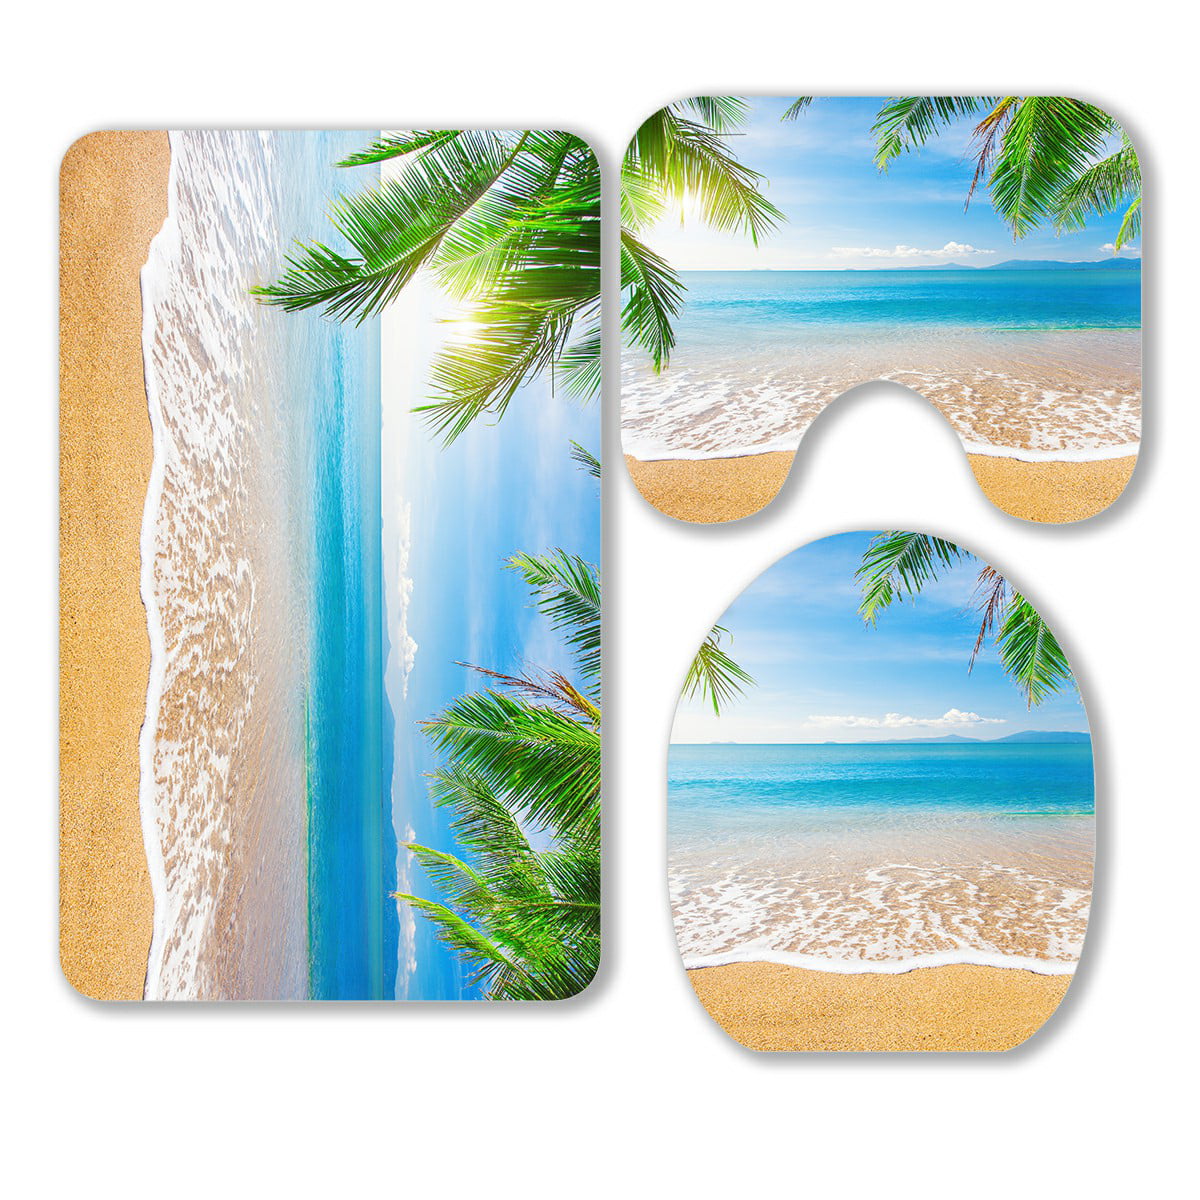 ECZJNT Palm and tropical beach 3 Piece Bathroom Rugs Set